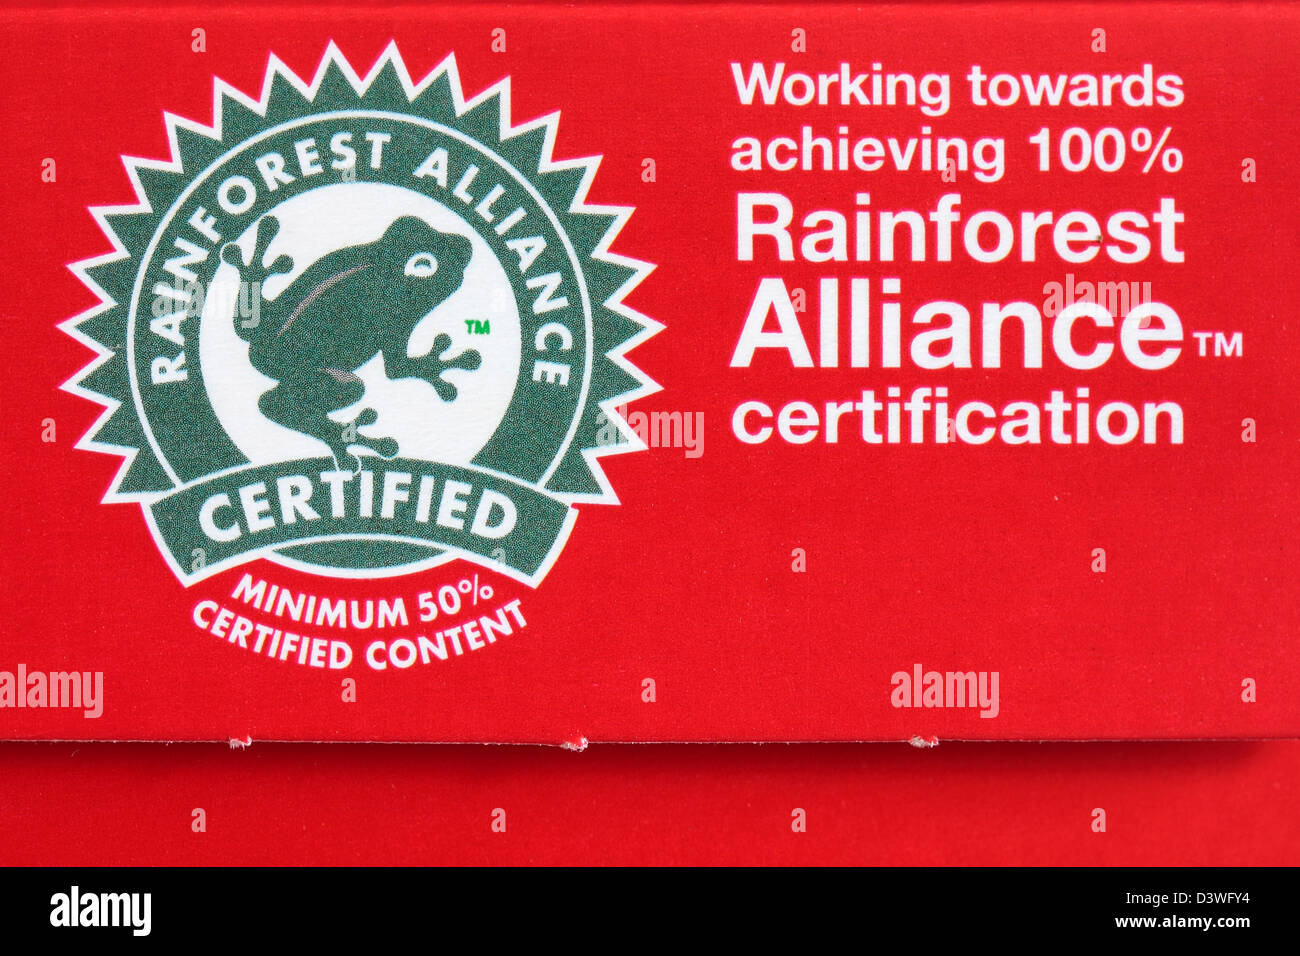 Rainforest Alliance Logo working towards achieving 100% Rainforest Alliance certification Stock Photo